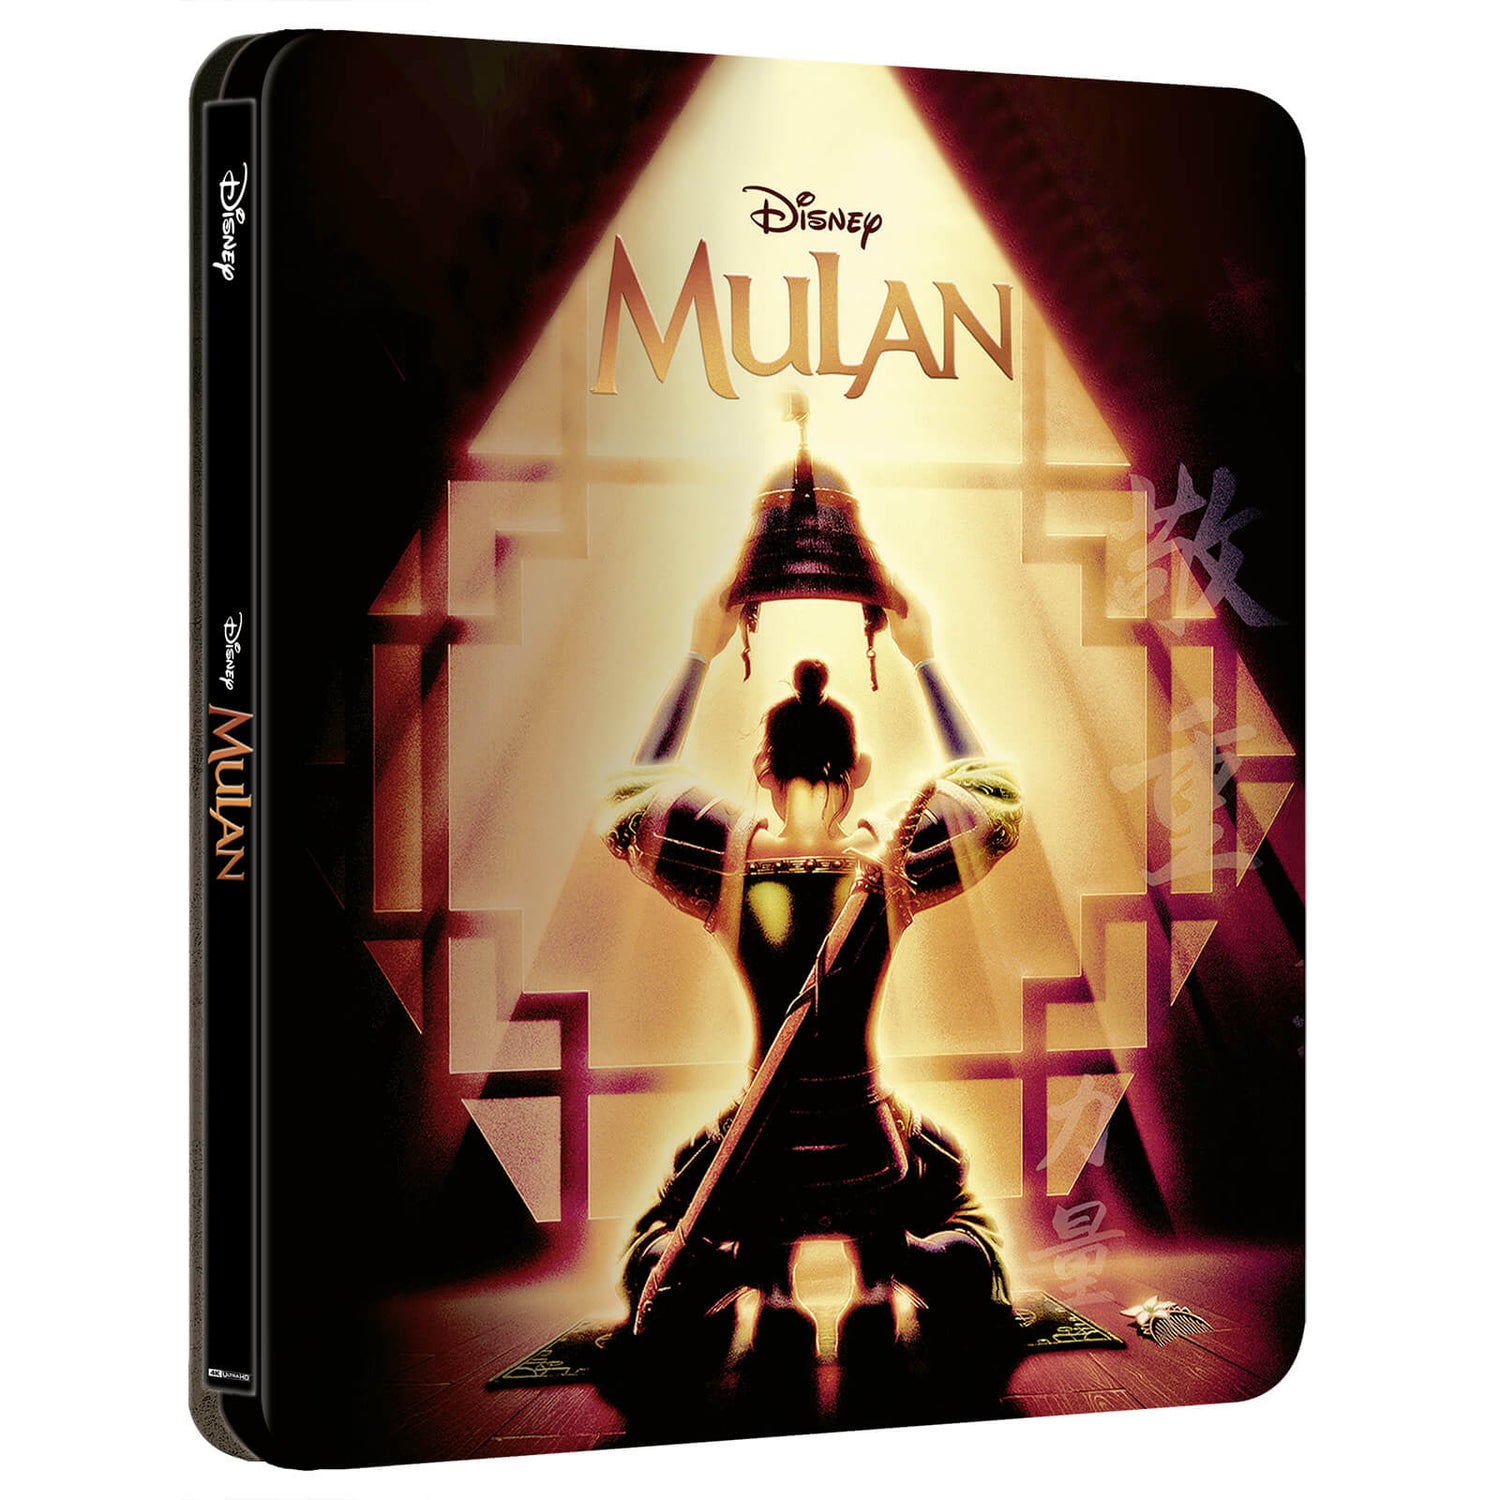 Disney's Mulan (Animated) - Zavvi Exclusive 4K Ultra HD Steelbook (Includes Blu-ray)